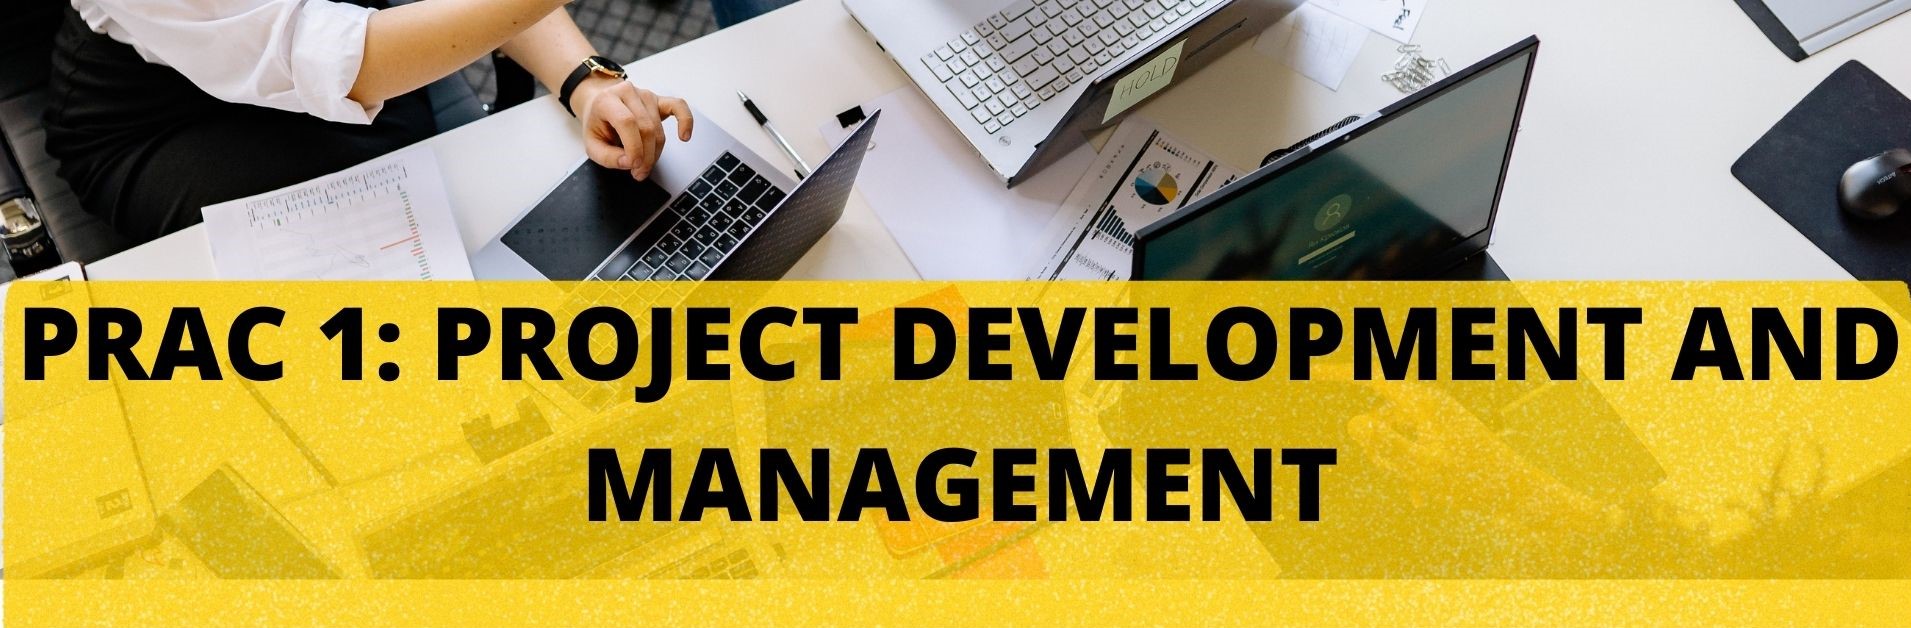 Prac 1: Project Development and Management